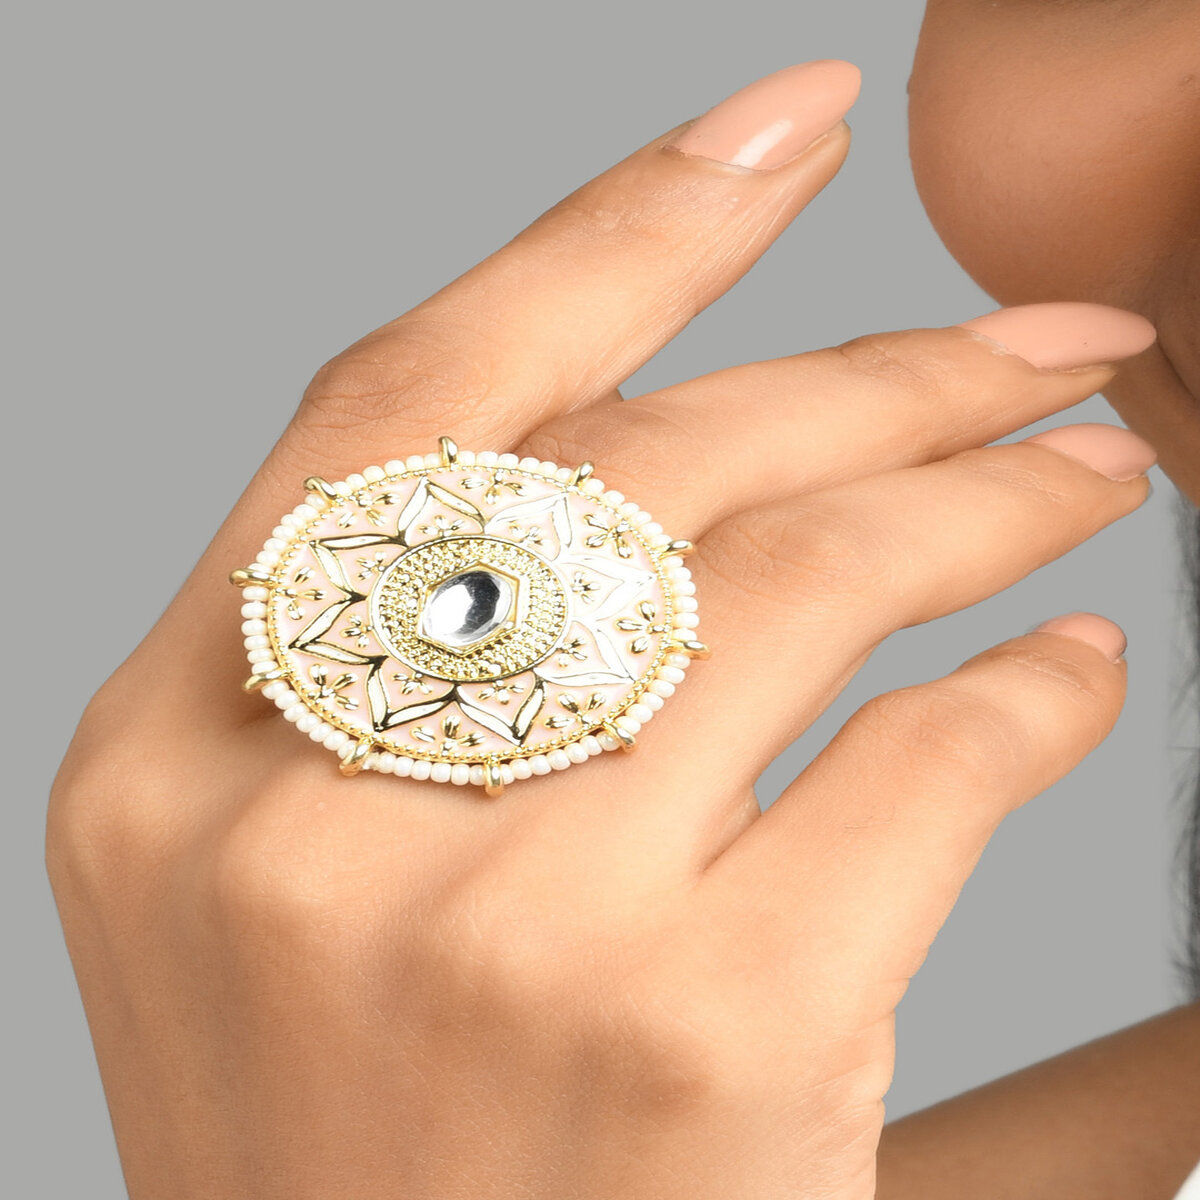 Diamond ring 'Big', Size 8 us (18.2mm) (XH2UZ48NQ) by kacperh